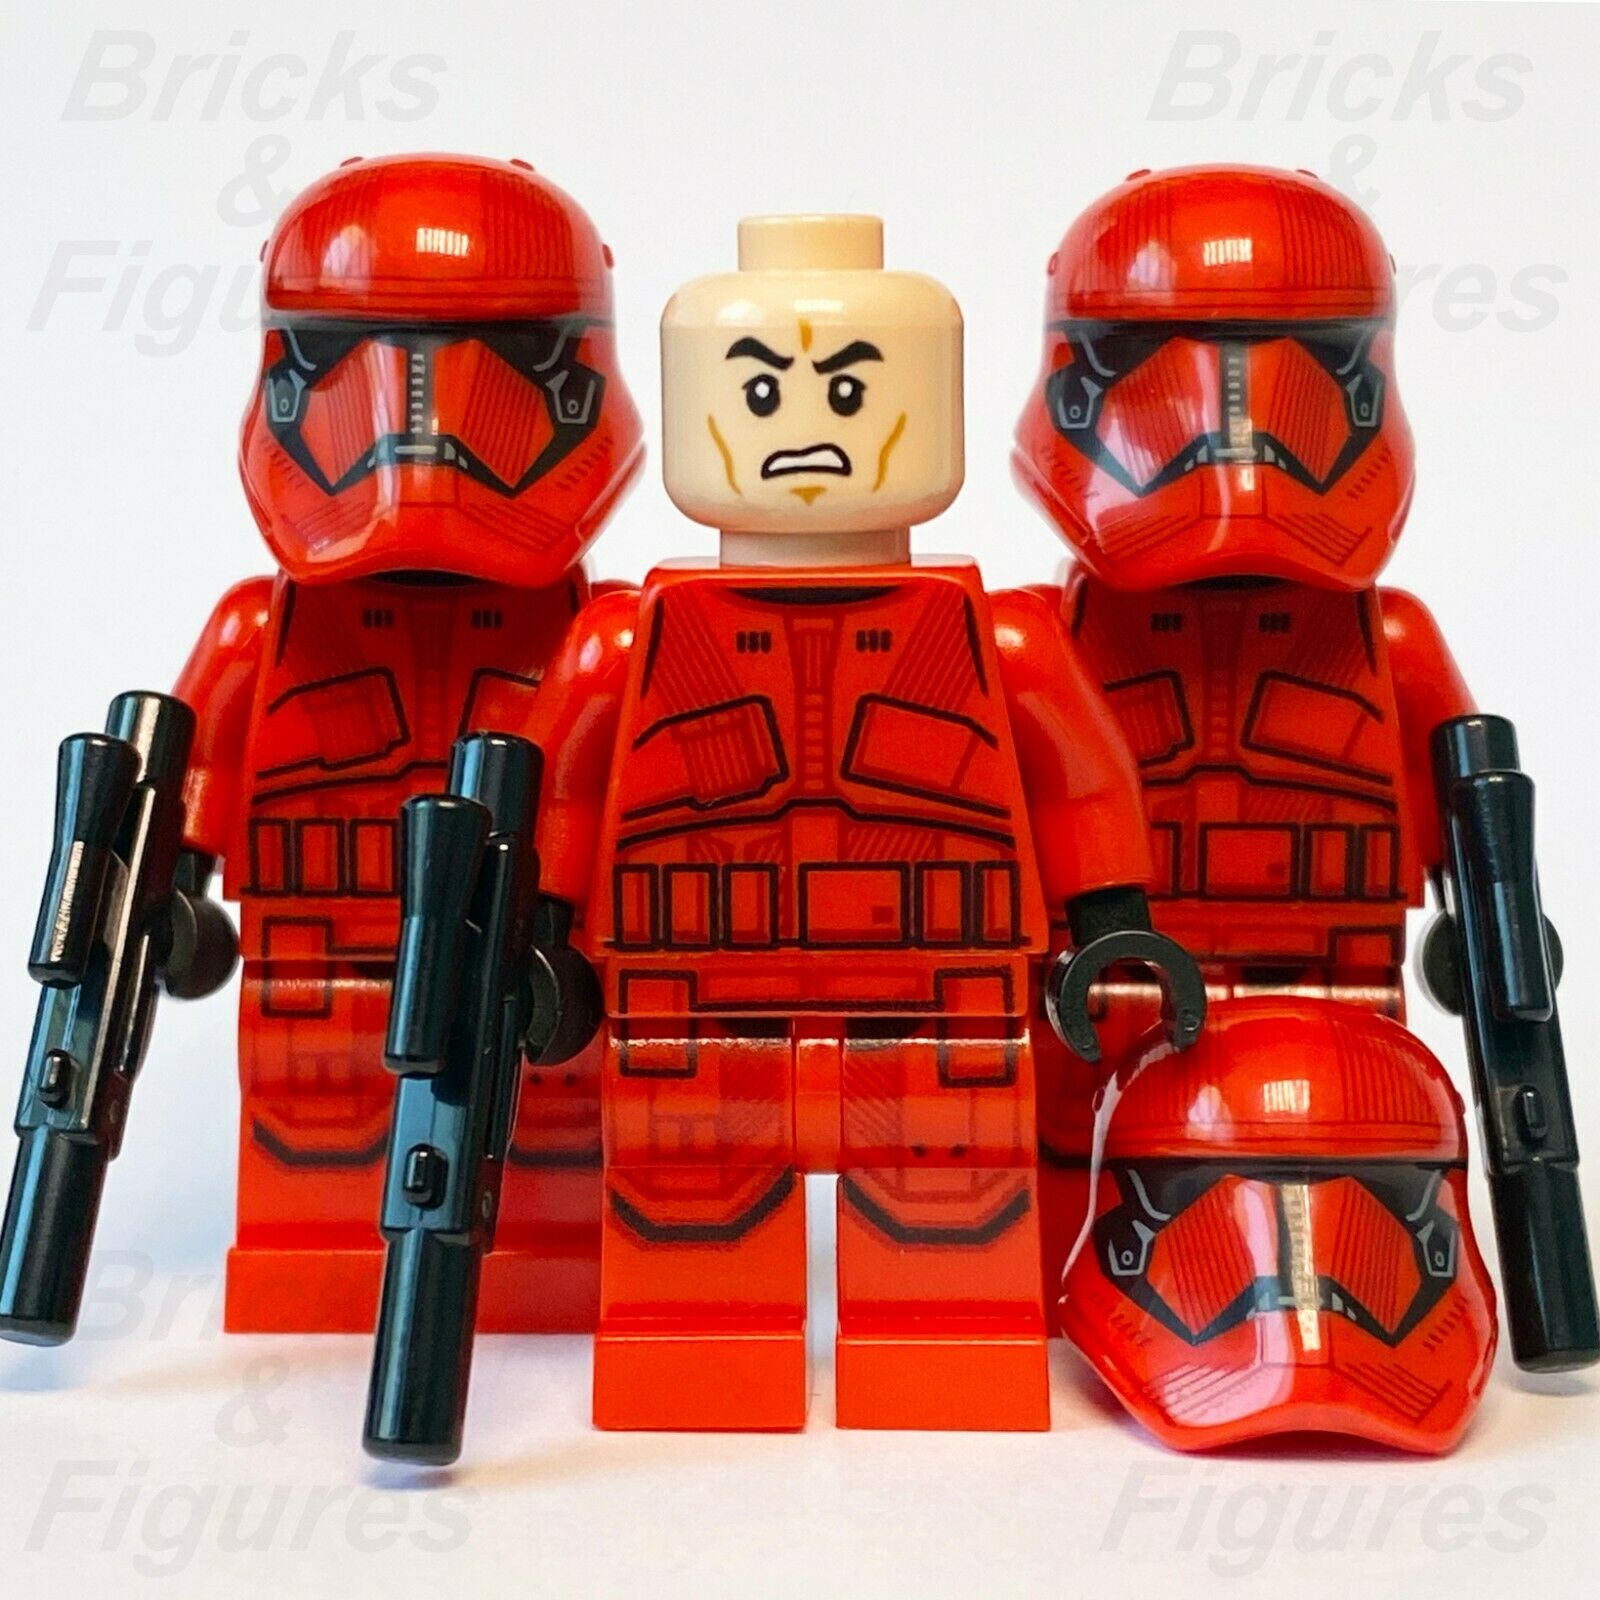 3 x New Star Wars LEGO Sith Trooper Final Order Minifigure from set 75256 75266 - Bricks & Figures